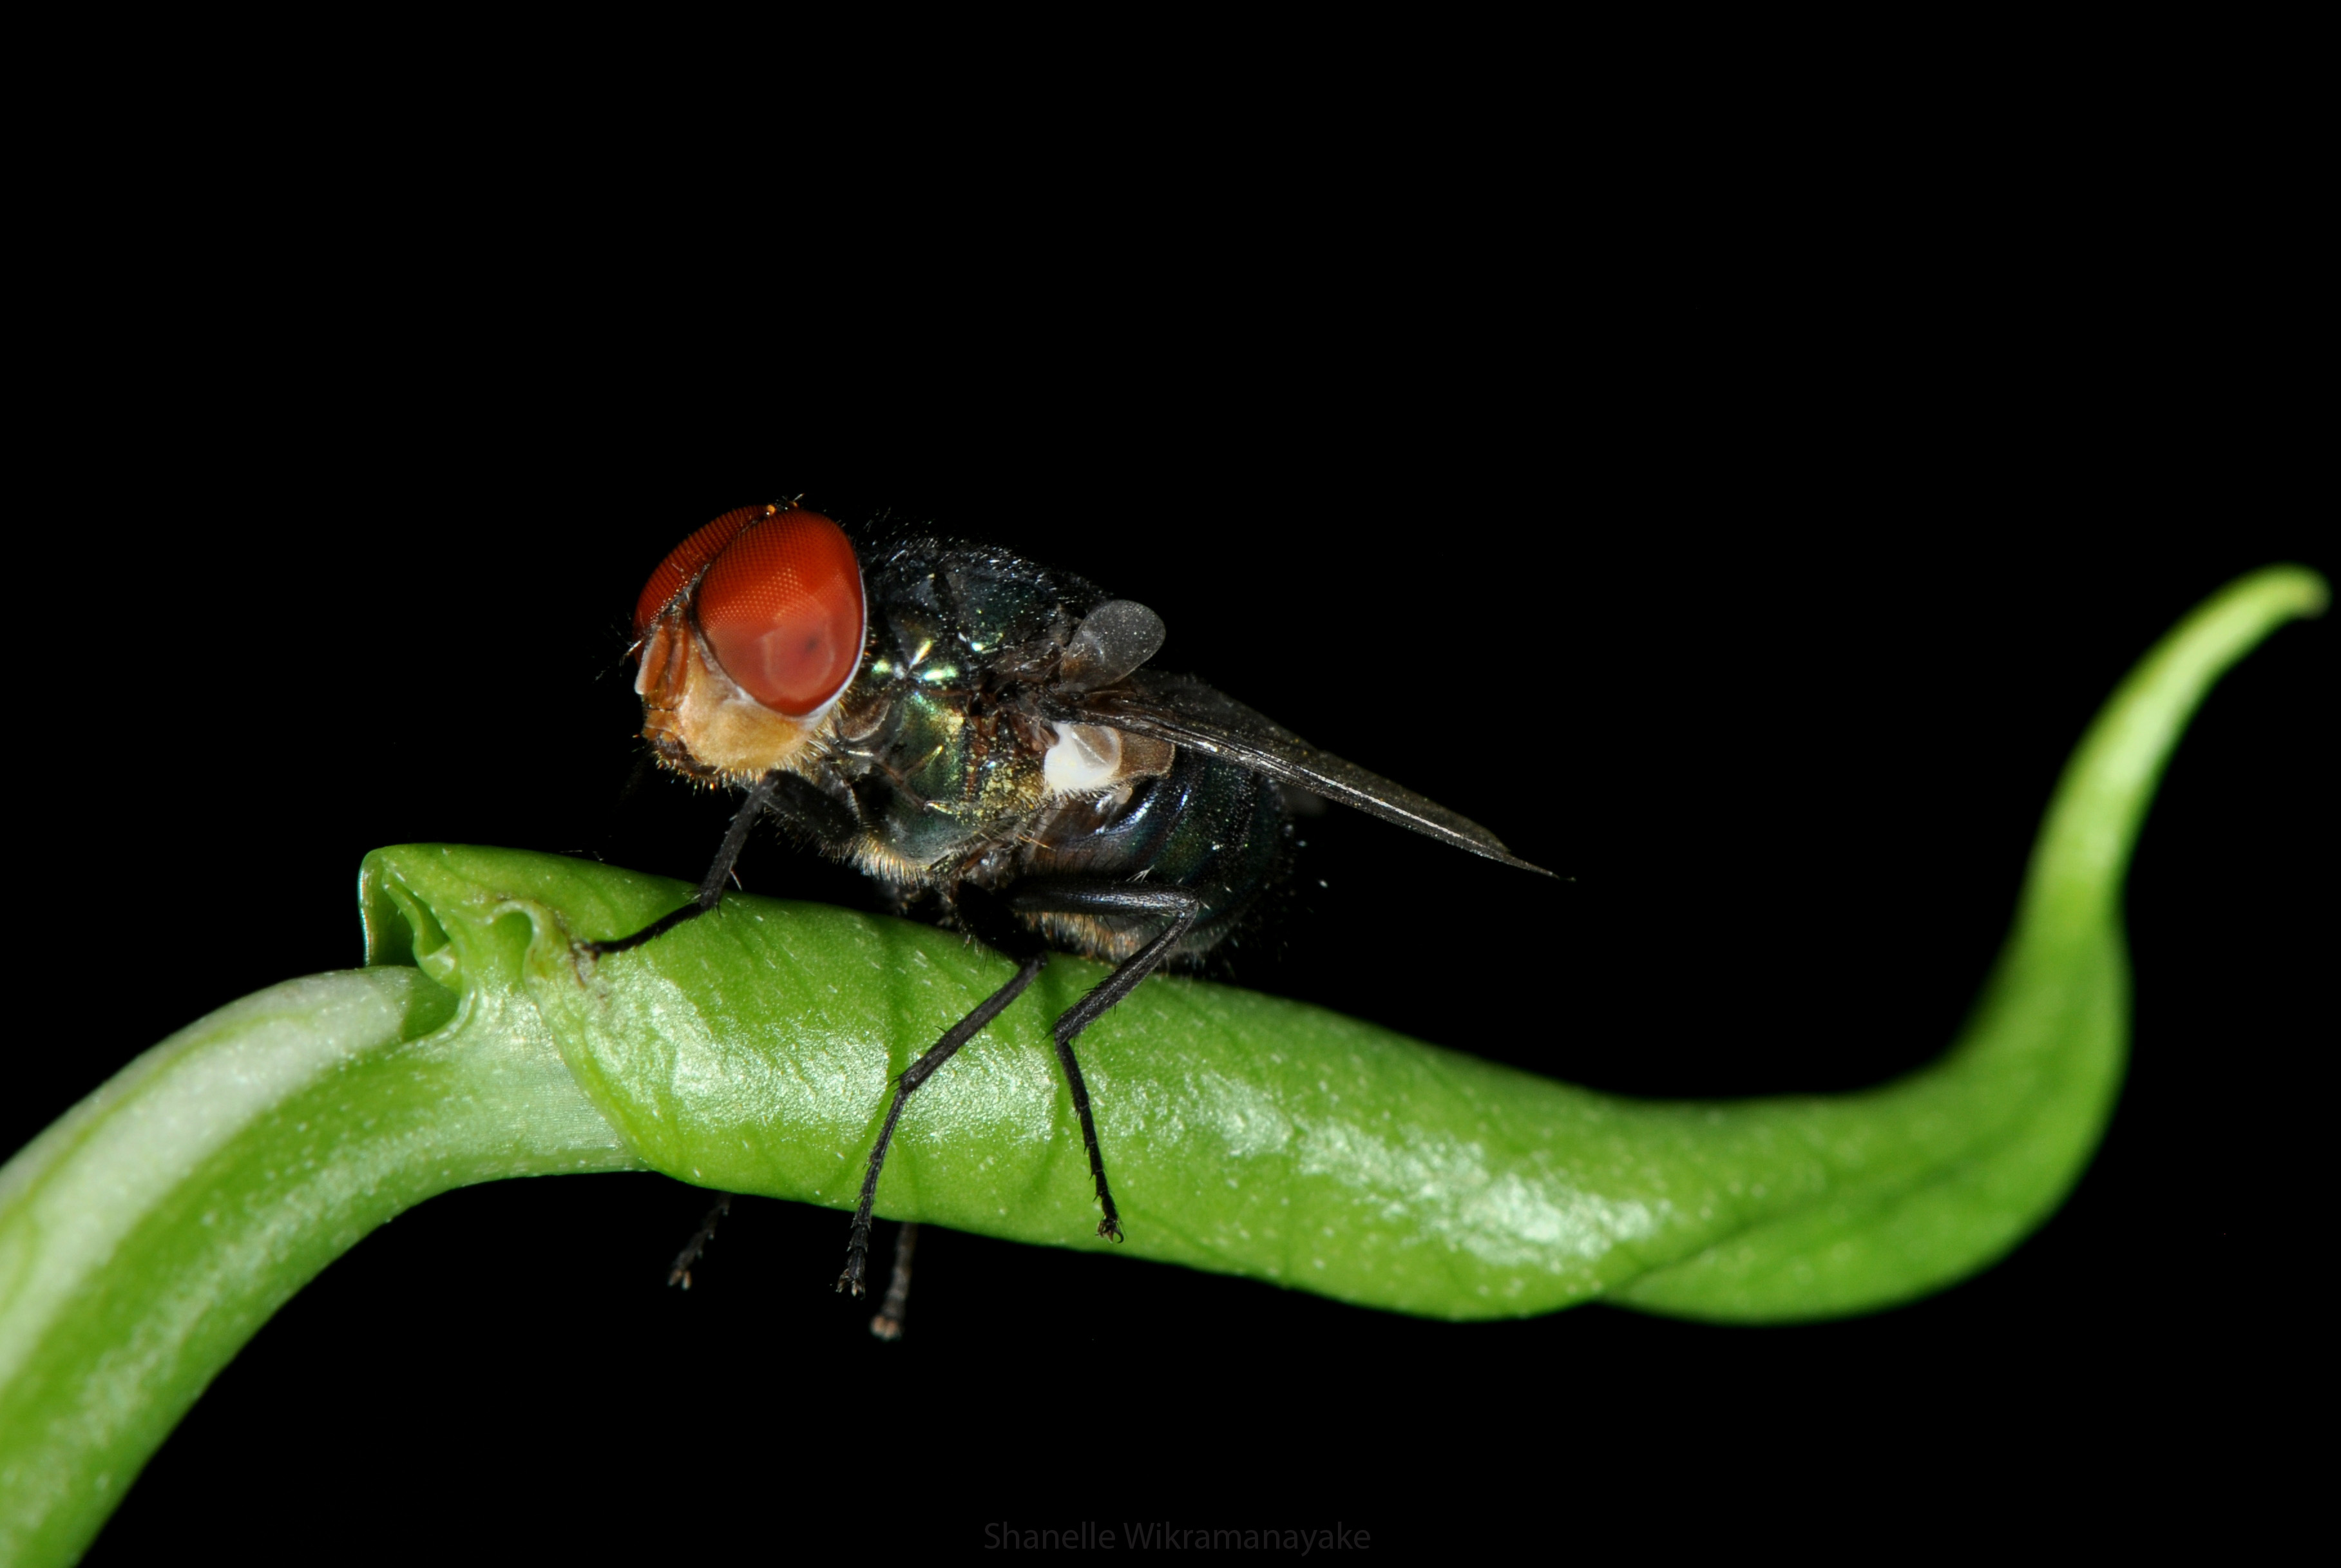 Greenfly